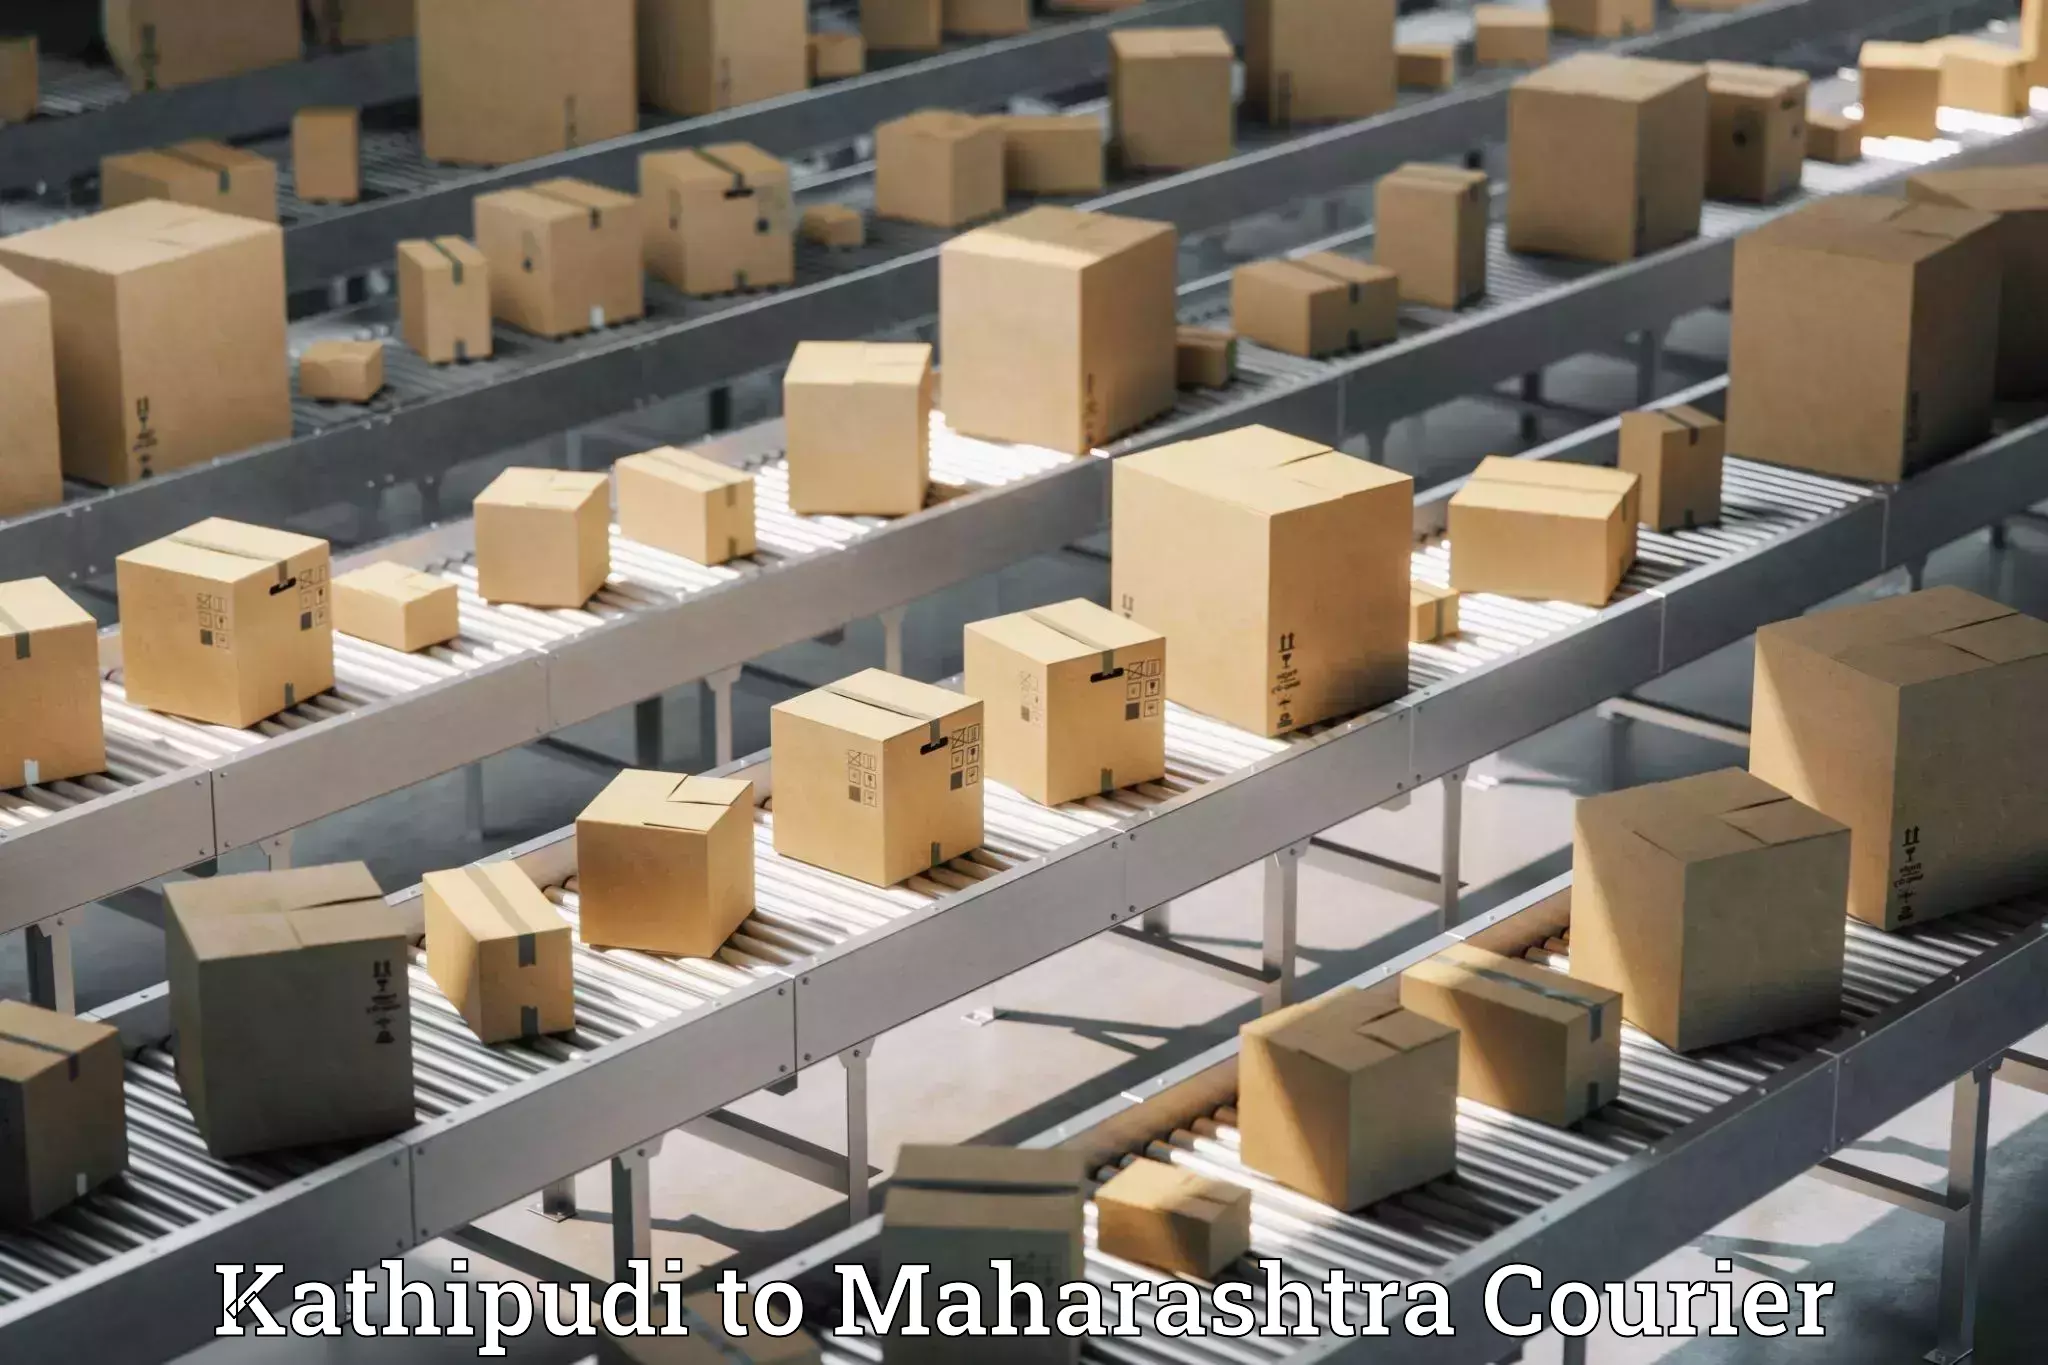 Flexible delivery schedules Kathipudi to IIT Mumbai